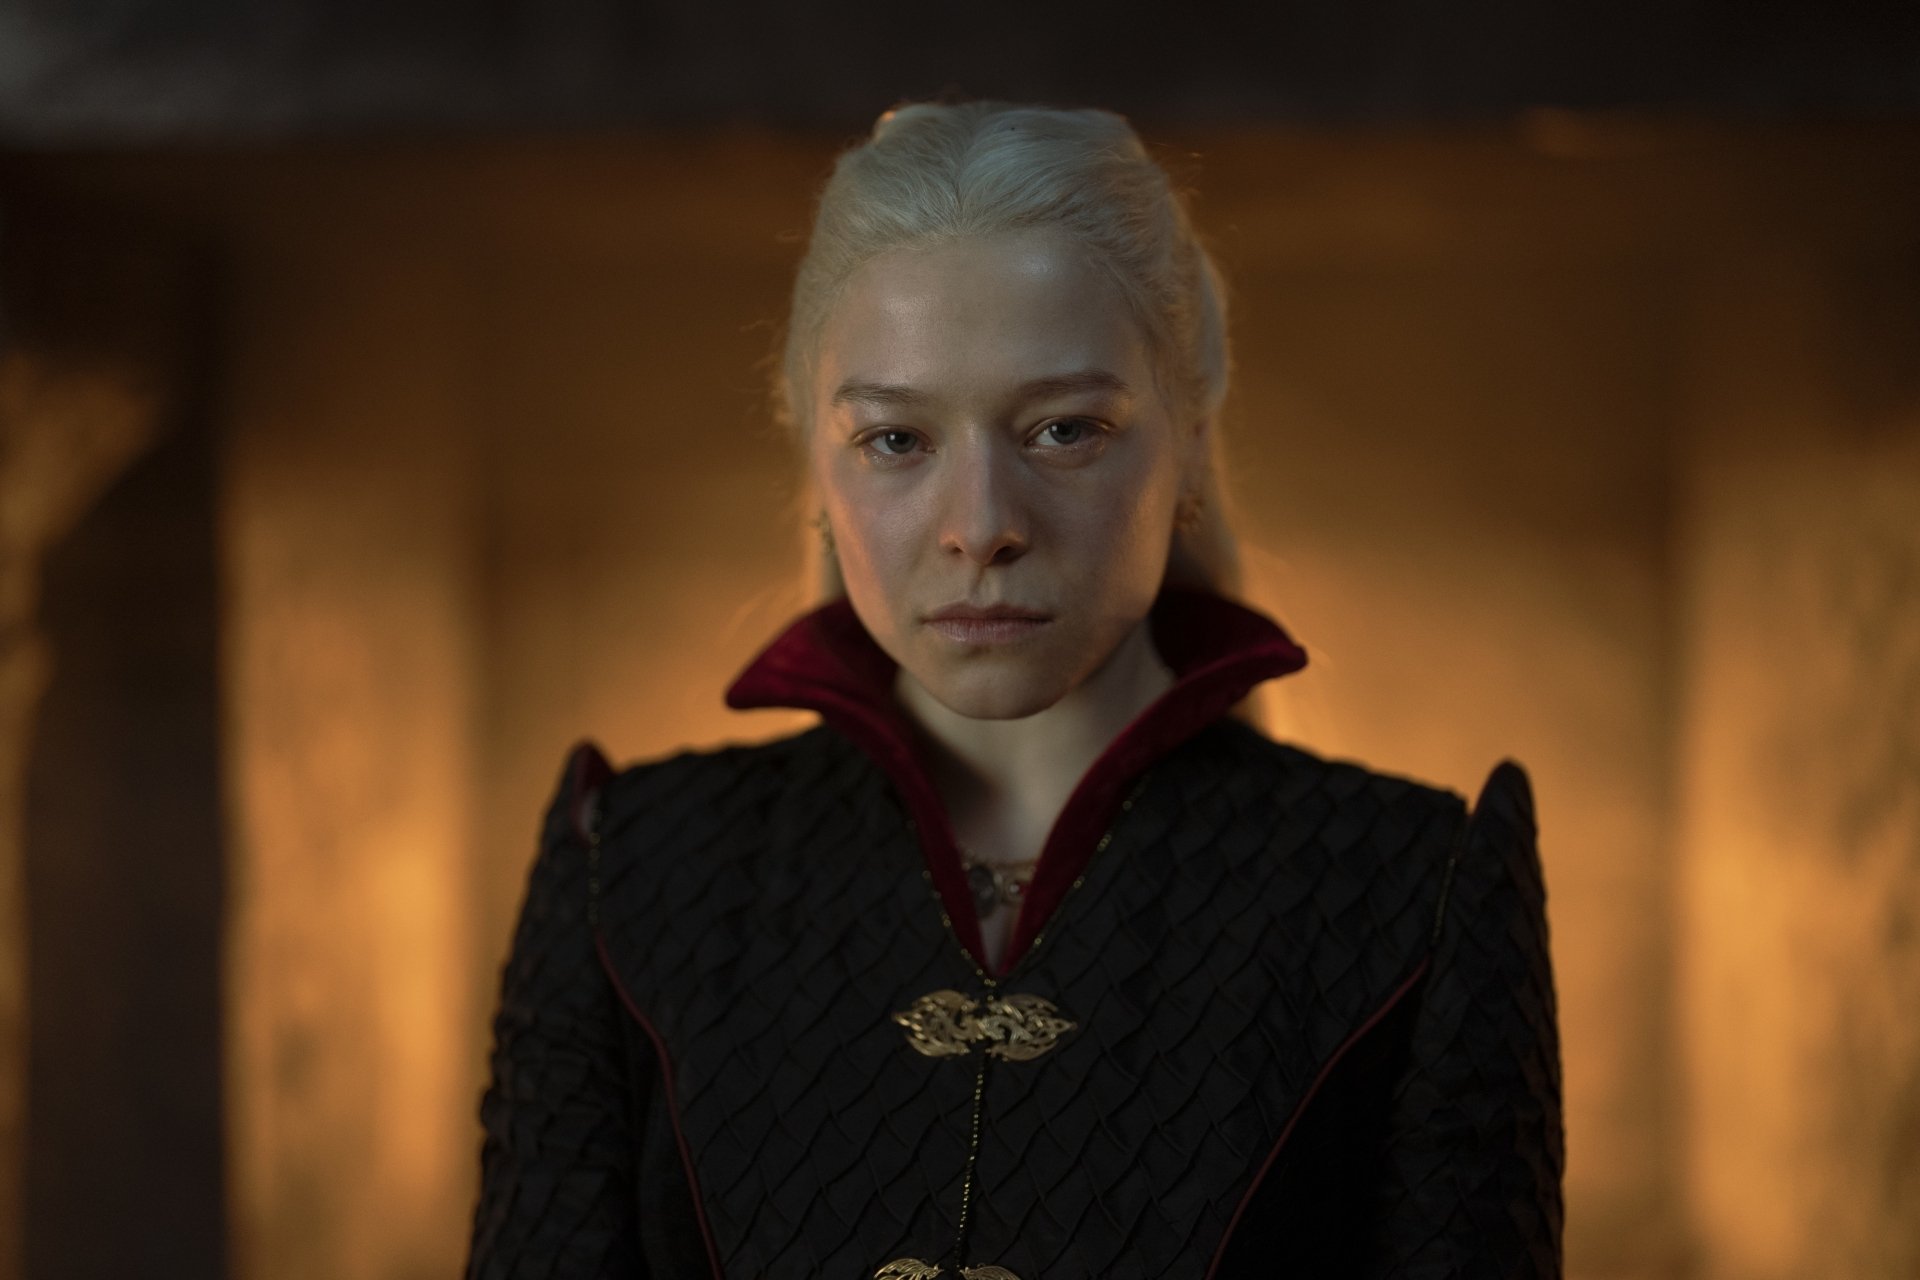 Emma D’Arcy as Rhaenyra Targaryen